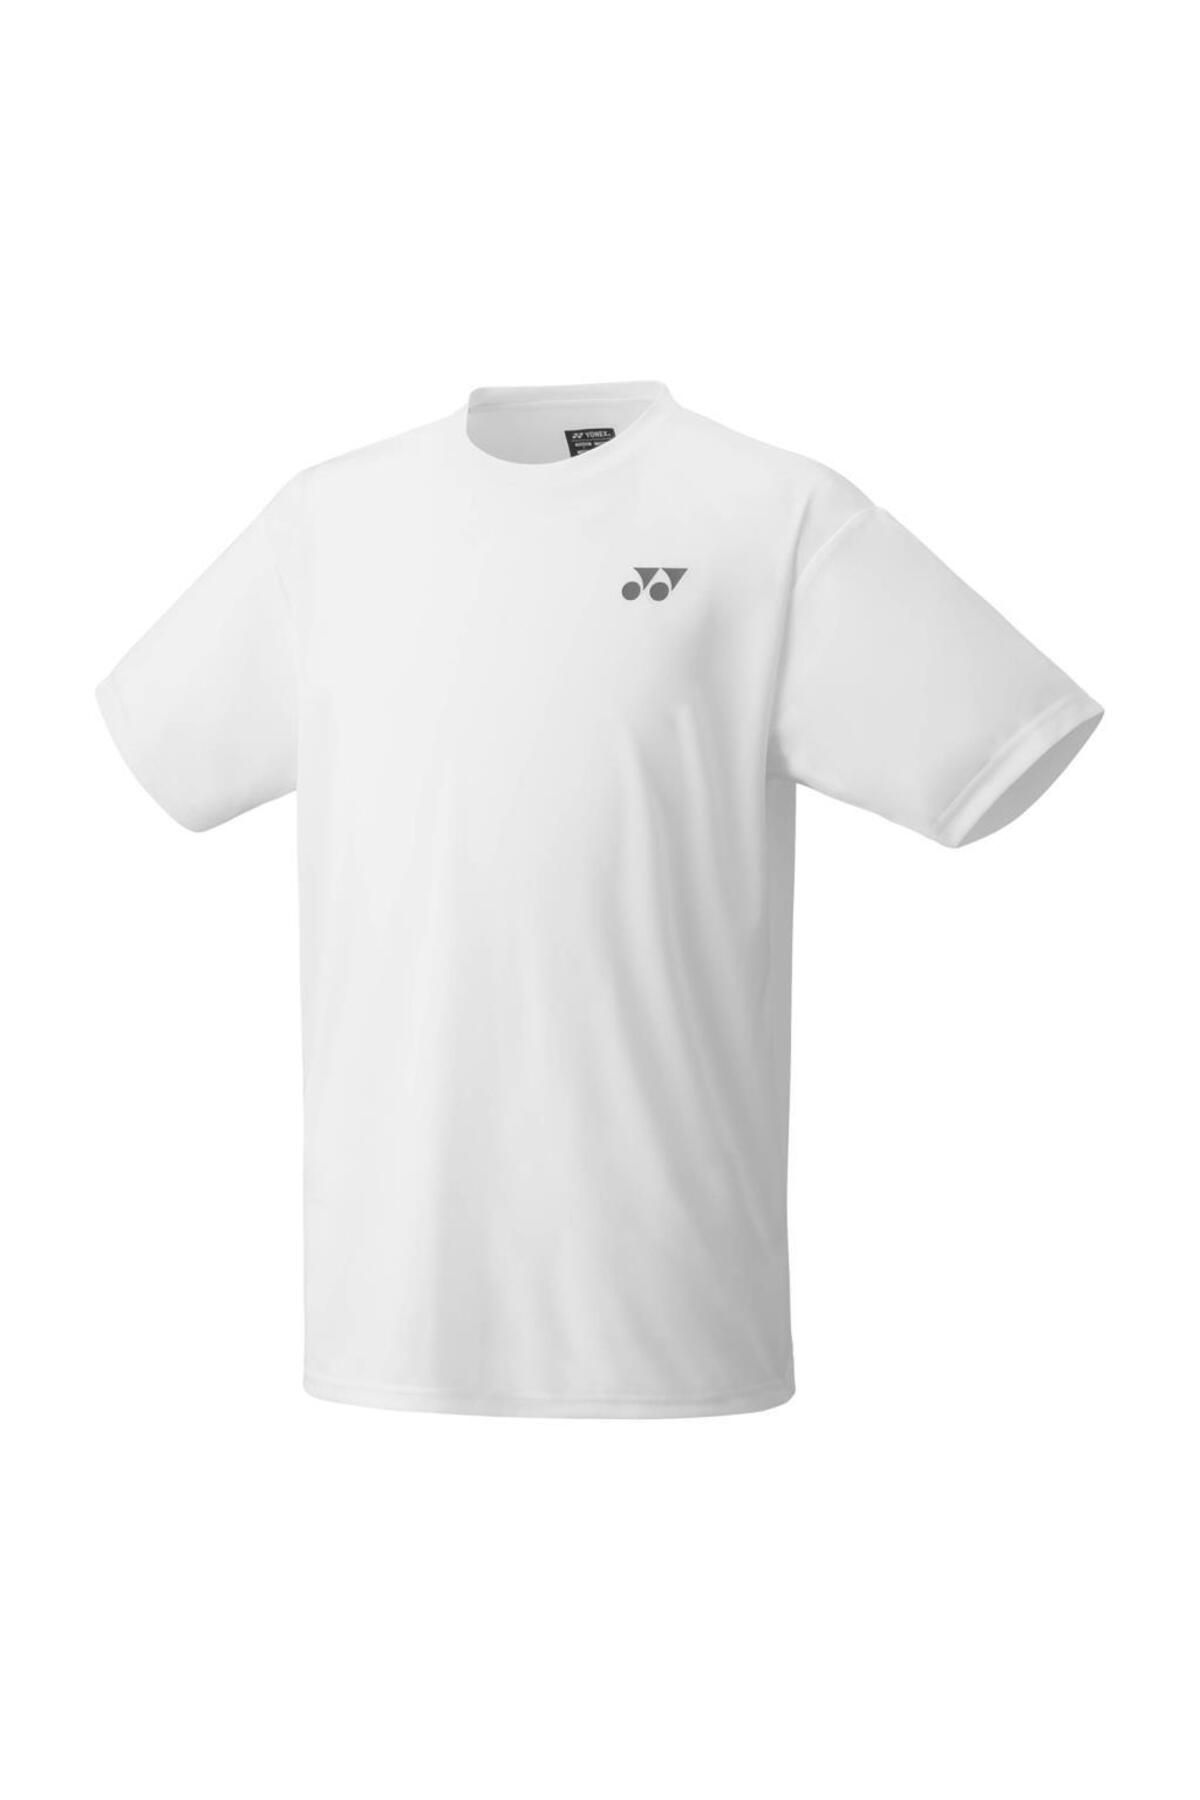 Yonex Tshirt Beyaz Erkek YM0045